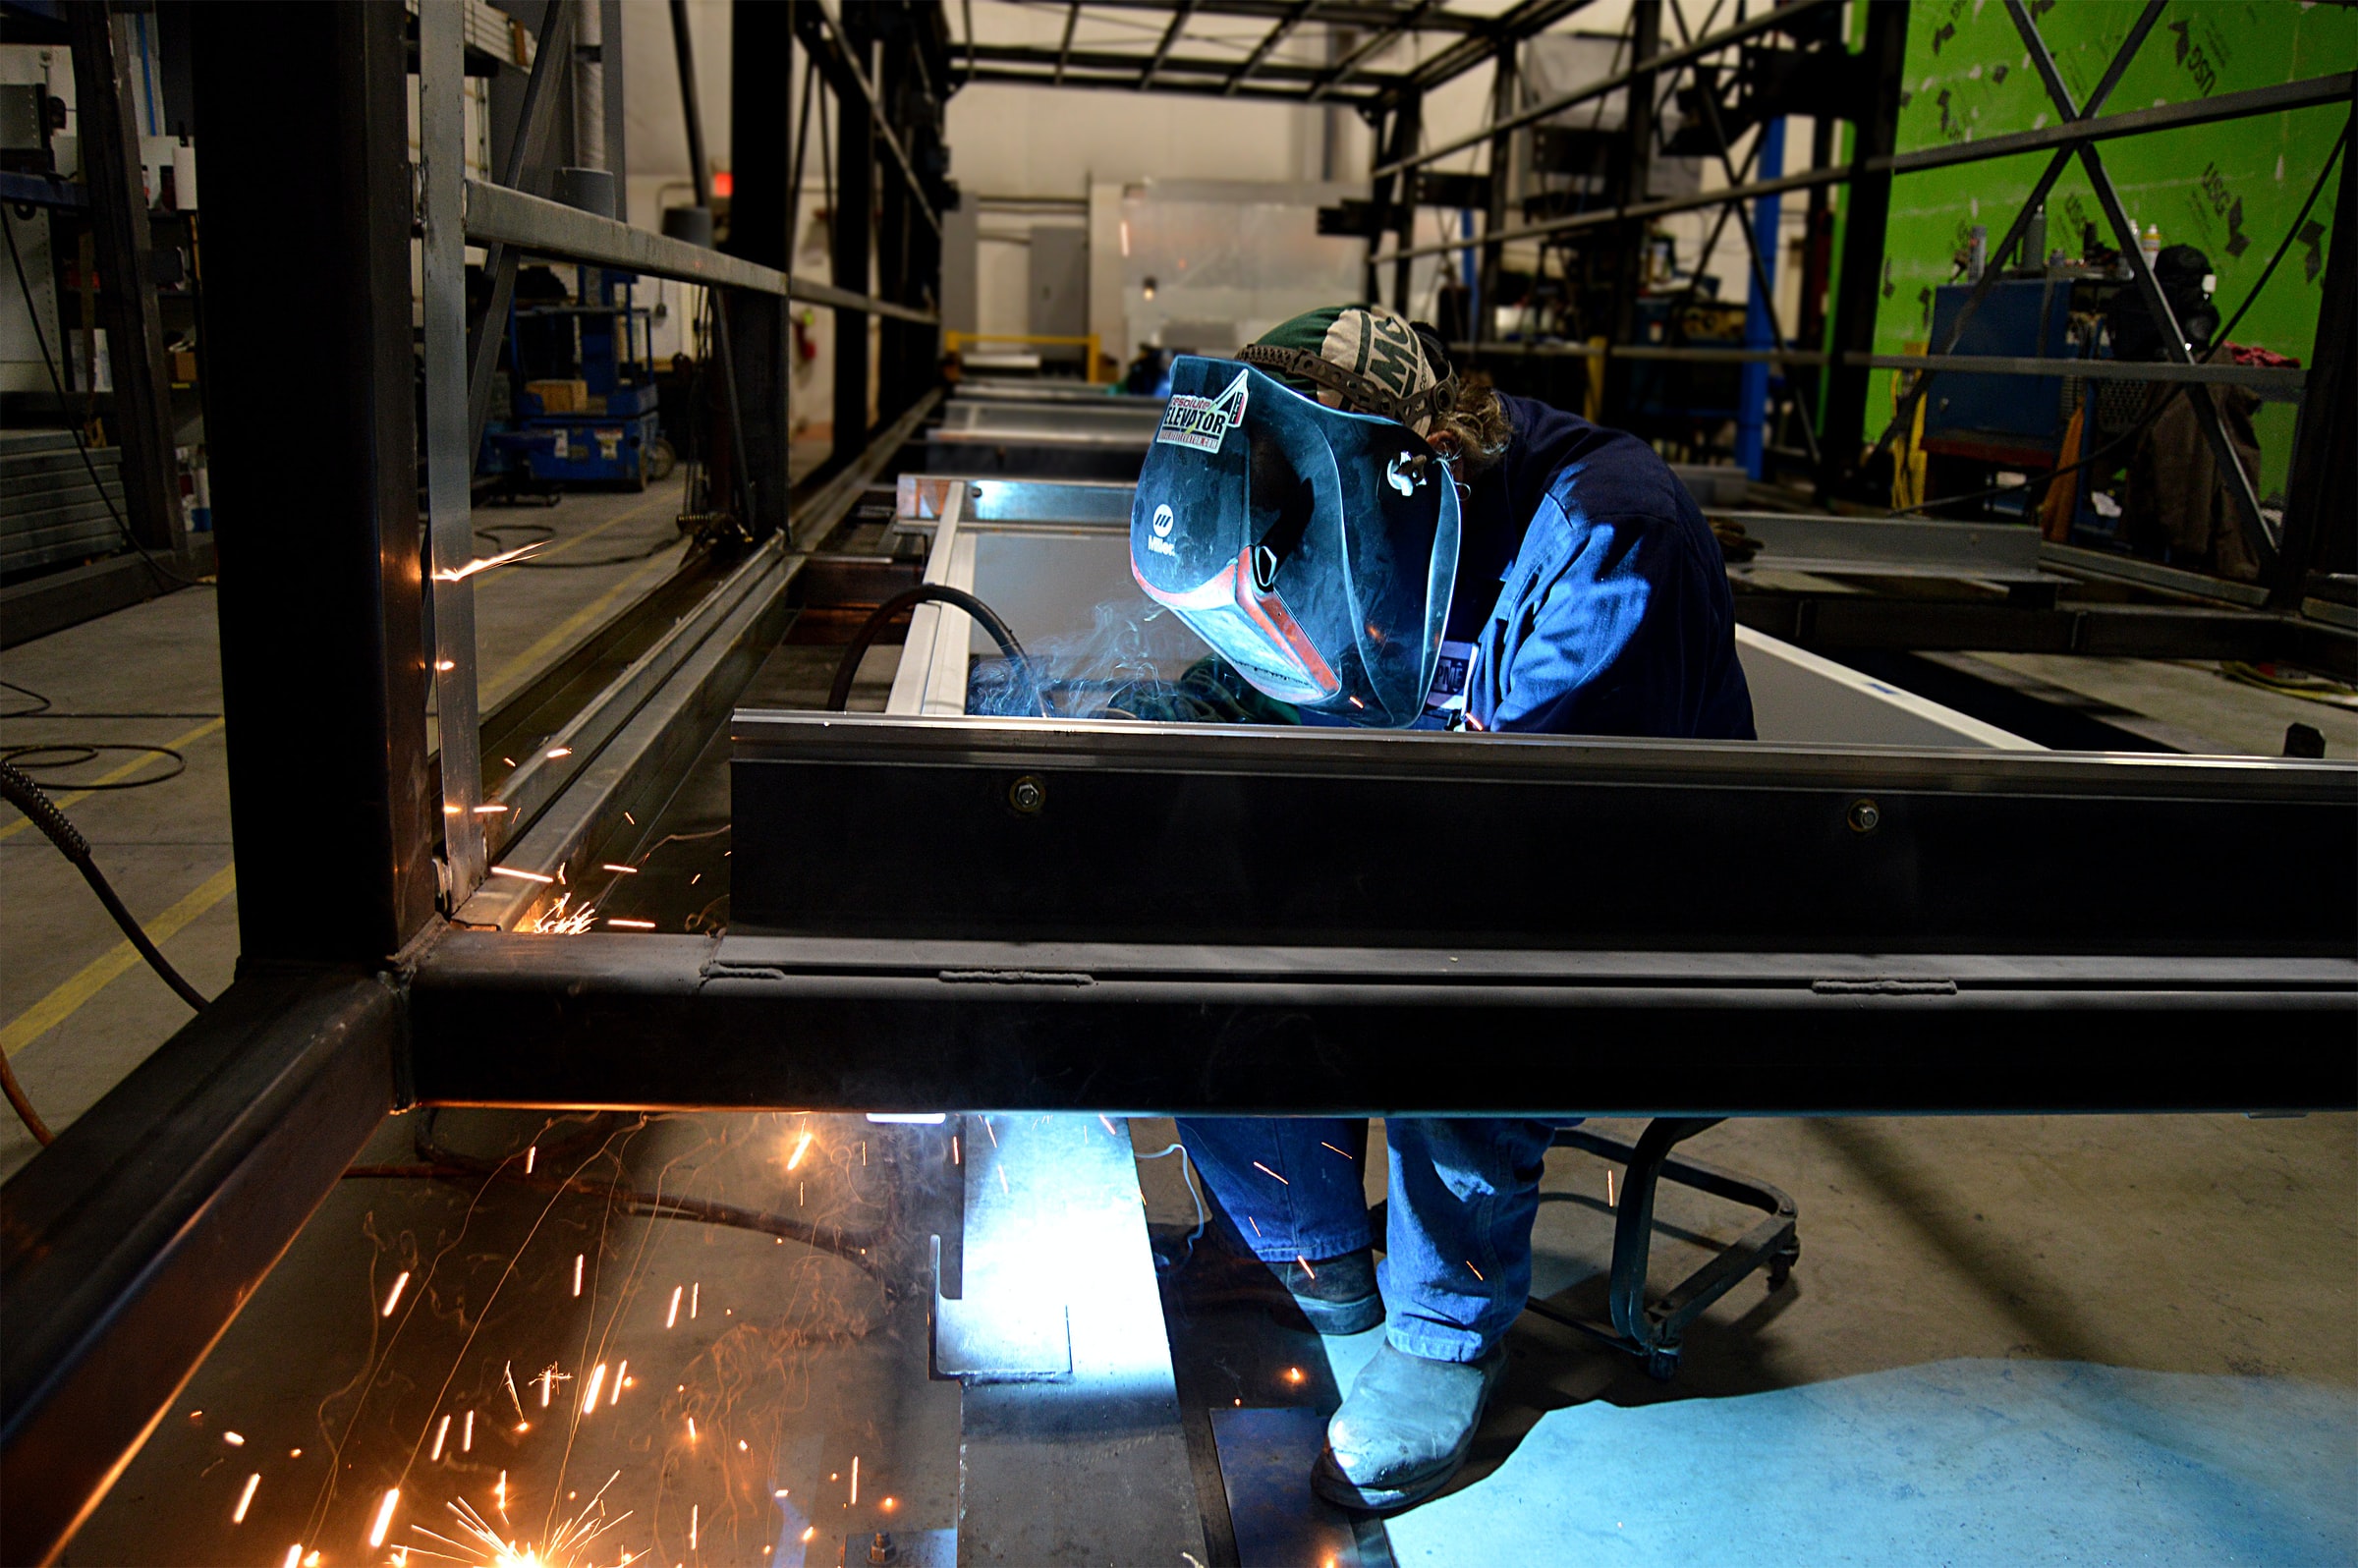 Welding robots are supplementing human welders within factories. Credit: Russ Ward on Unsplash